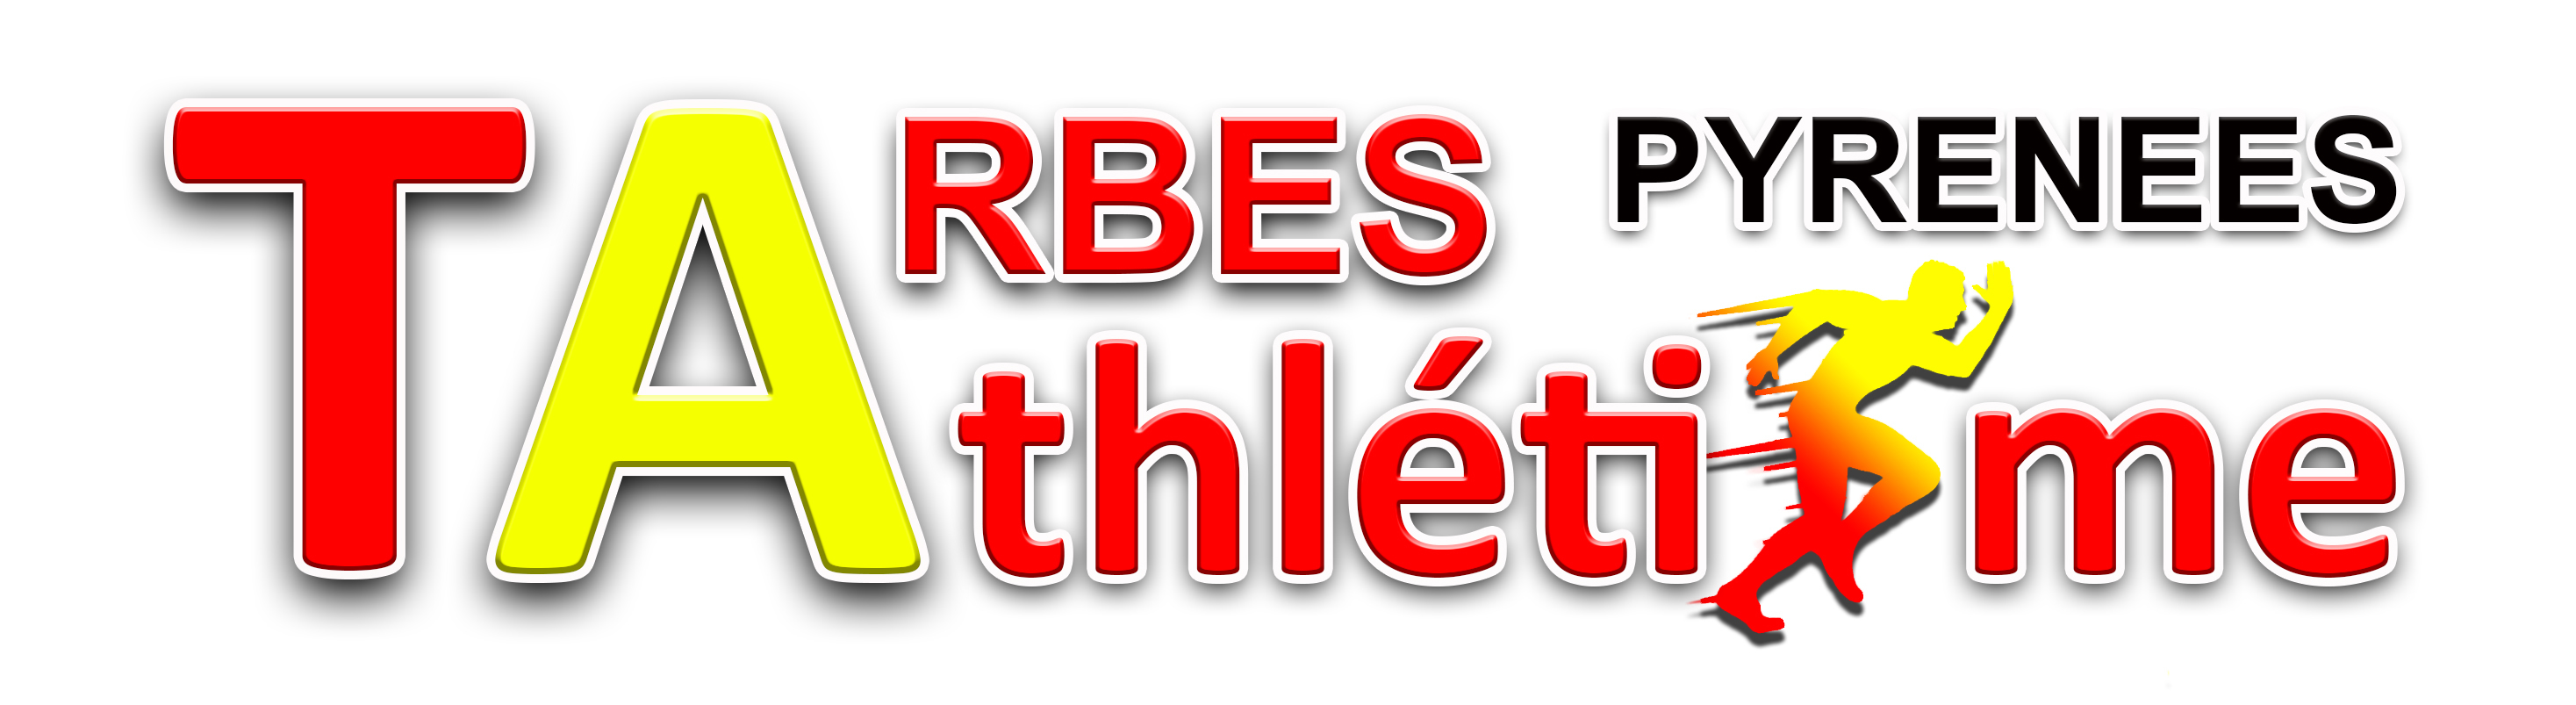 Tarbes Pyrénées Athlétisme